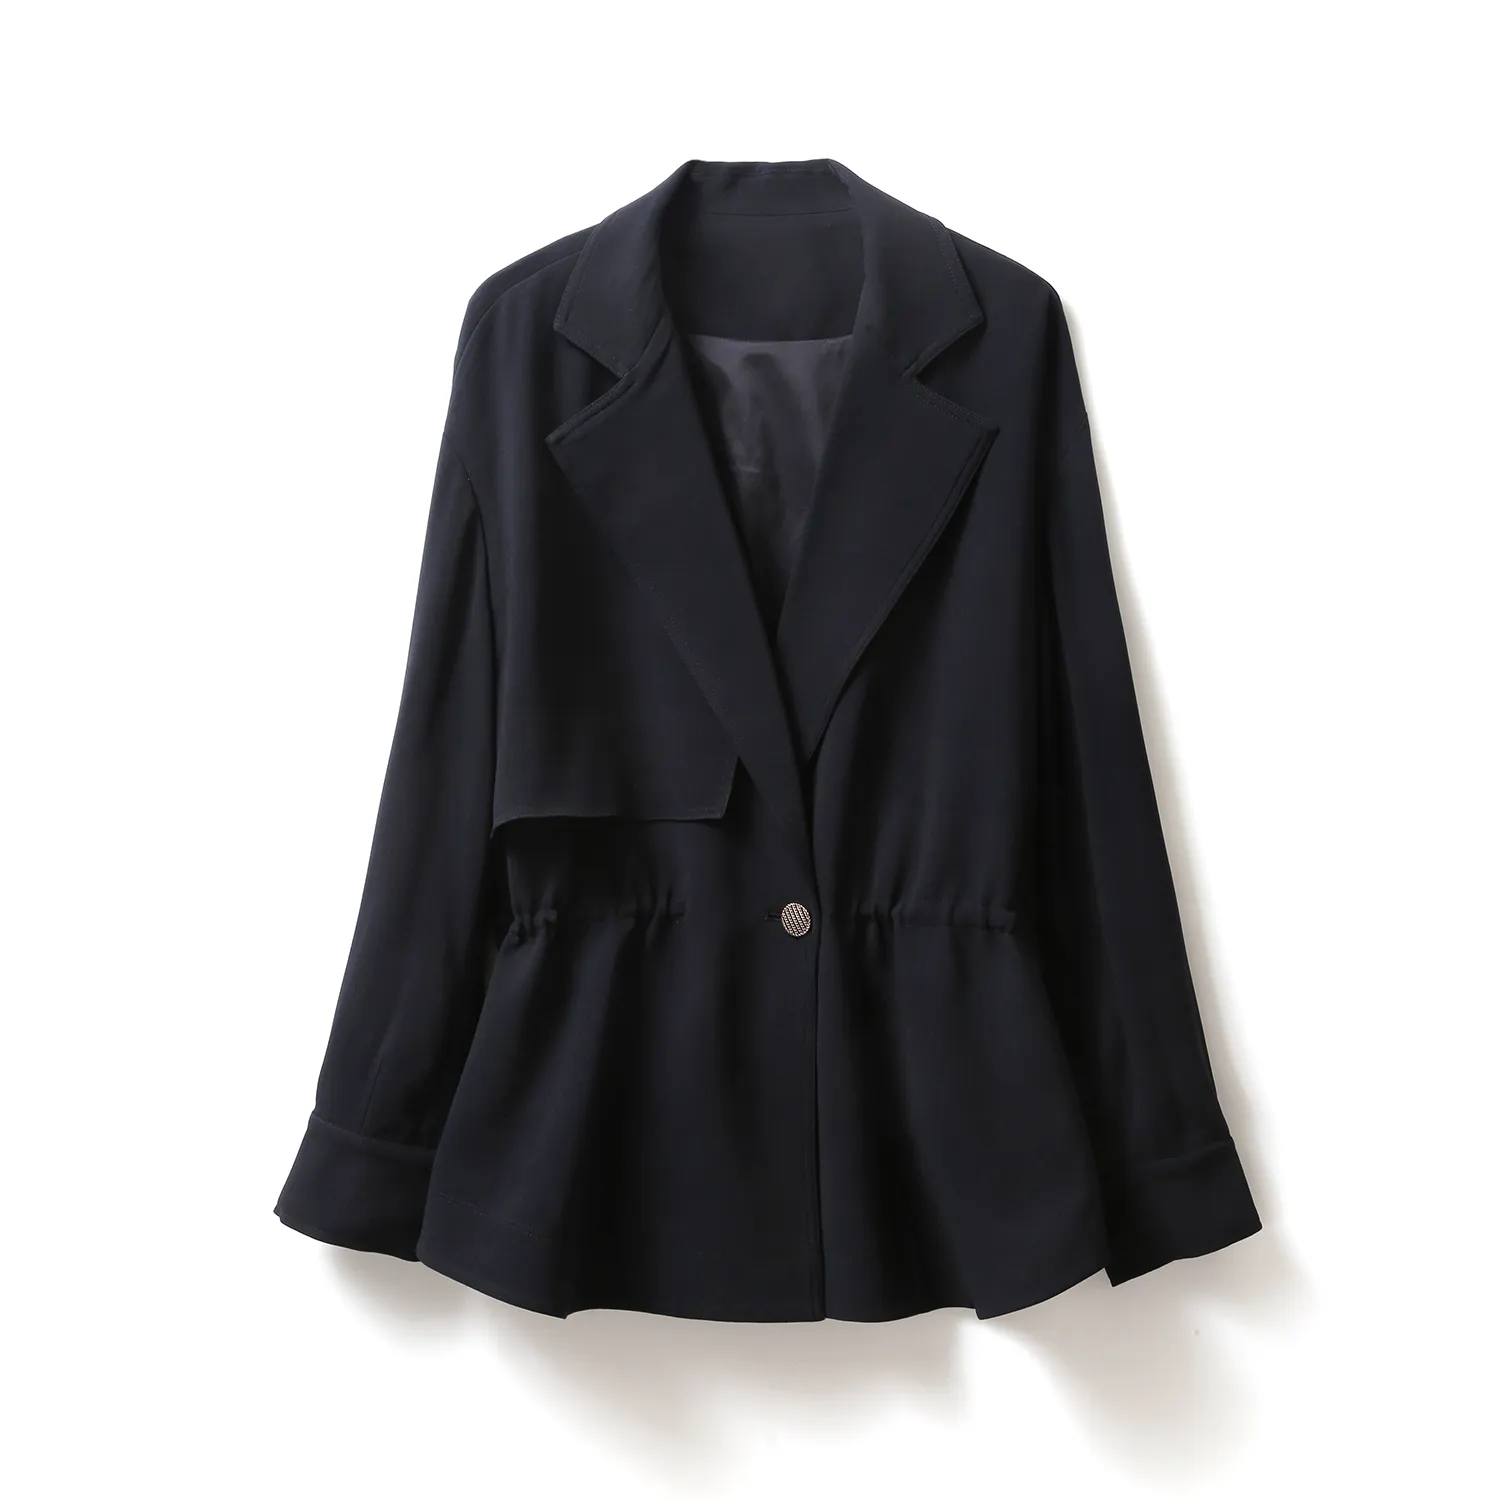 वसंत आकस्मिक कार्यालय लेडी ठोस स्लिम ब्लेजर्स रंगीन जाकेट जैकेट महिलाओं आकस्मिक एकल बटन लंबी आस्तीन काम सूट कोट